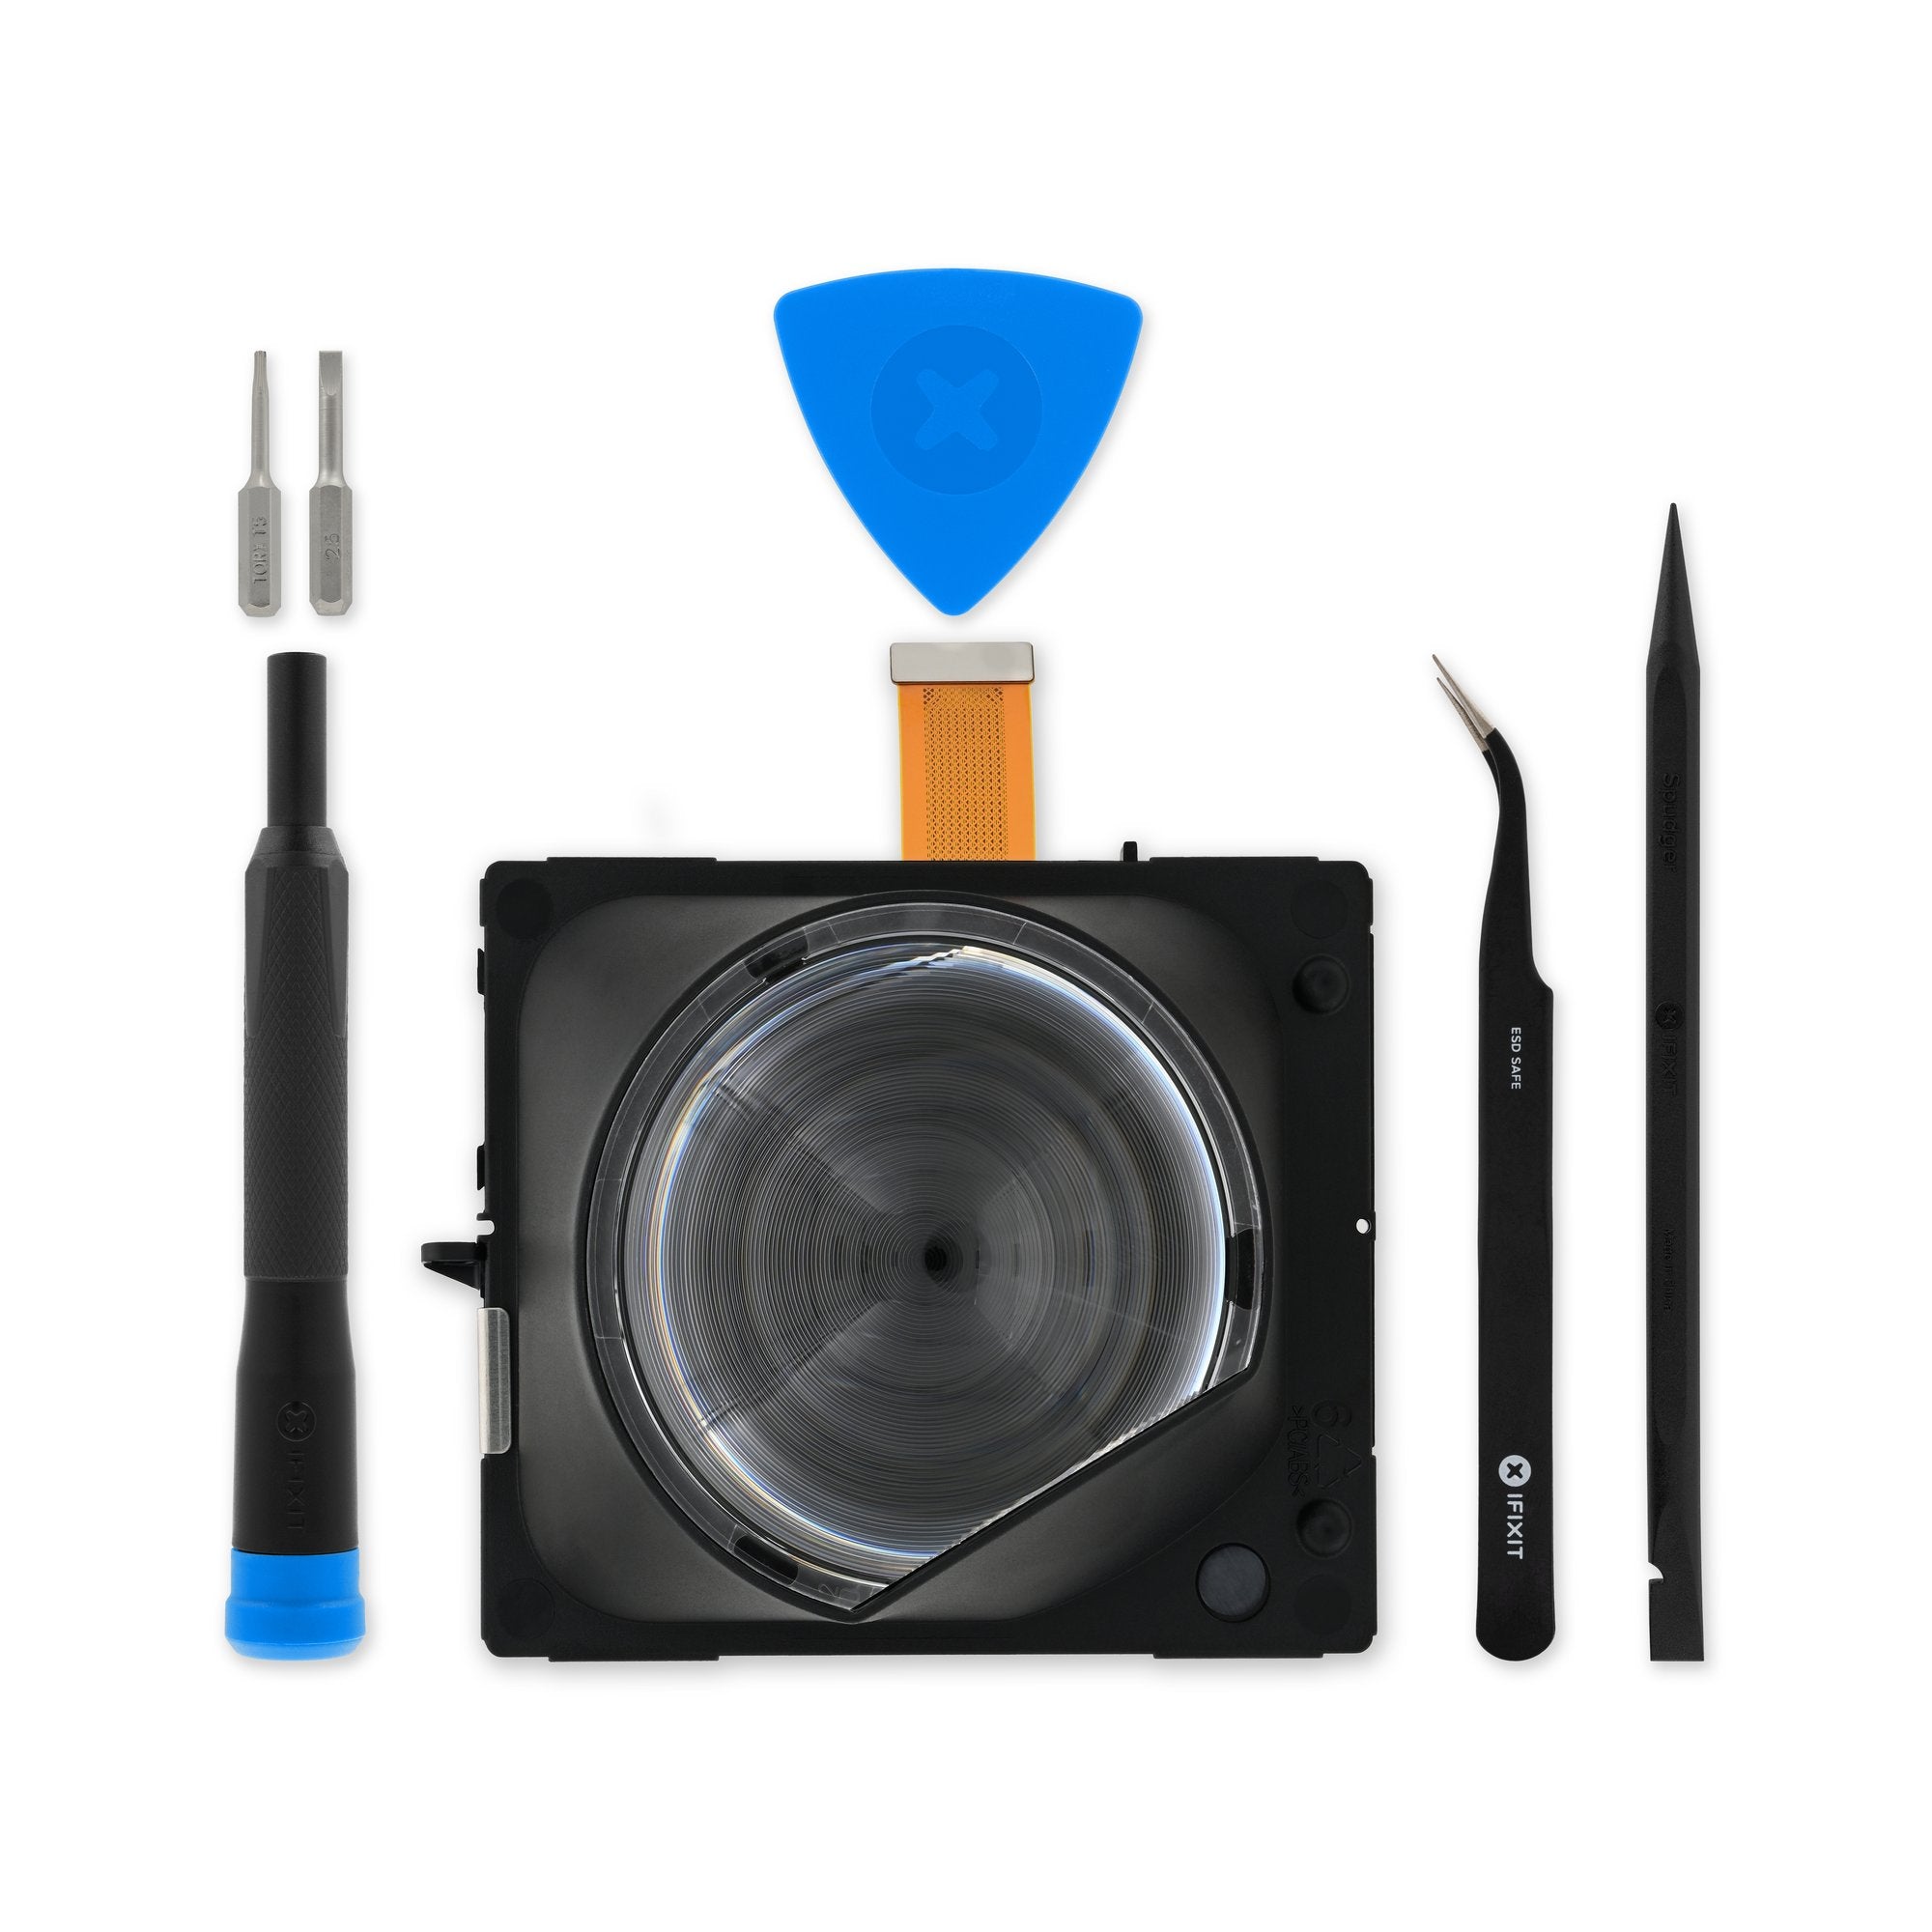 Valve Index Headset Right Eye Tube Assembly New Fix Kit